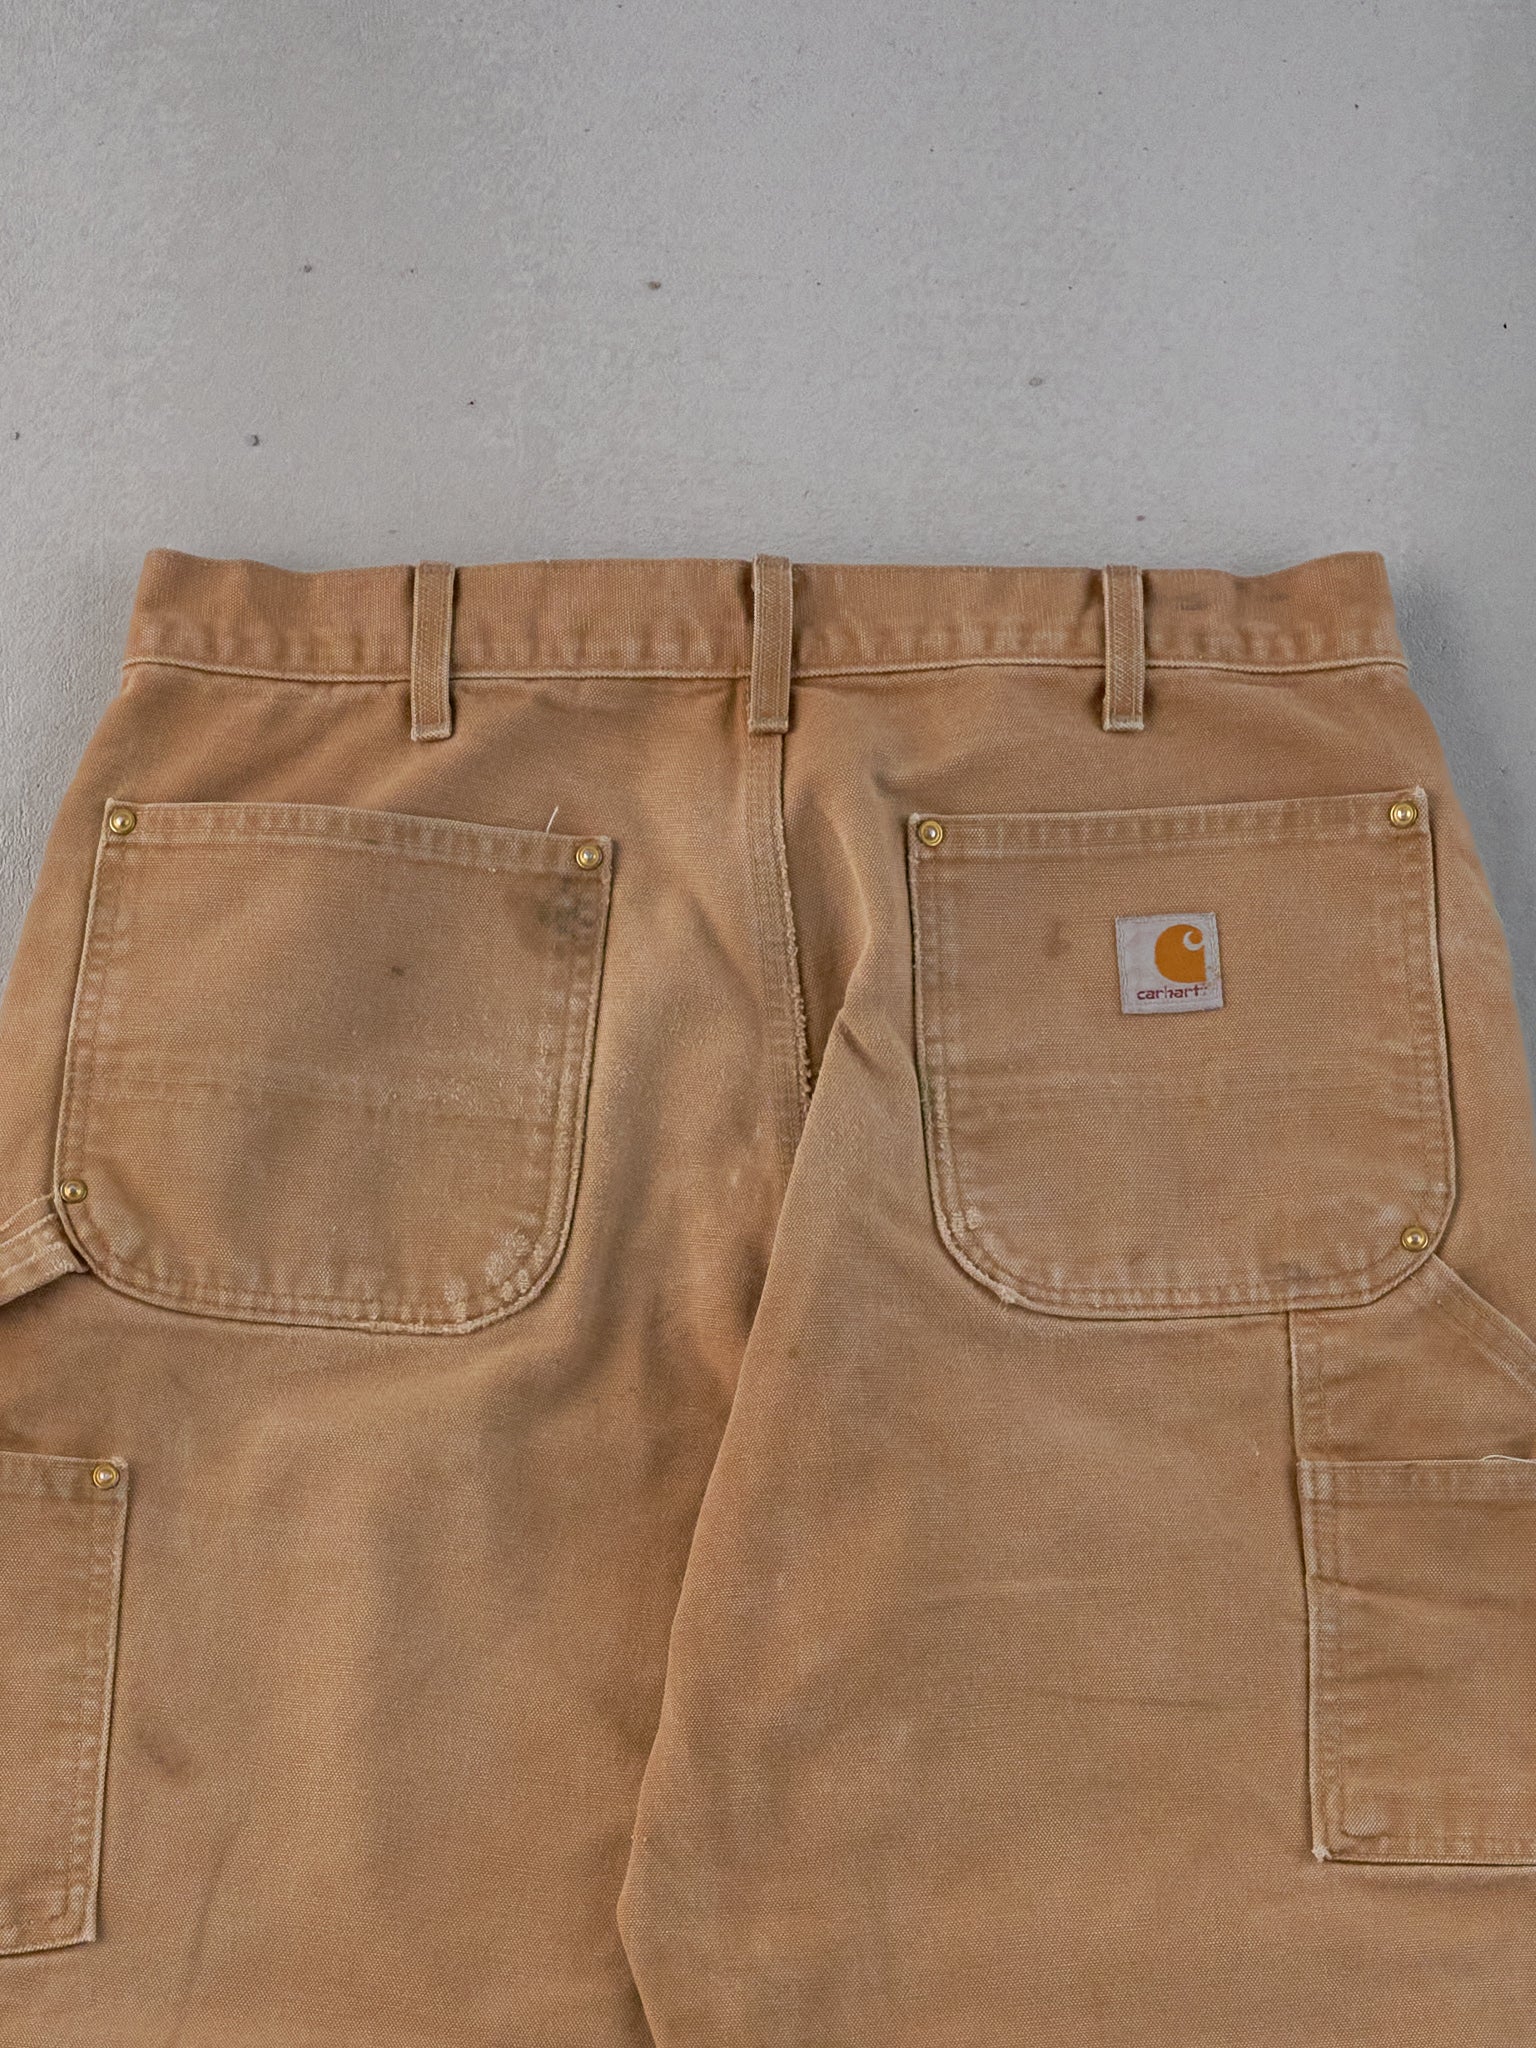 Vintage 90s Khaki Carhartt Double Knee Carpenter Pants (32x29)